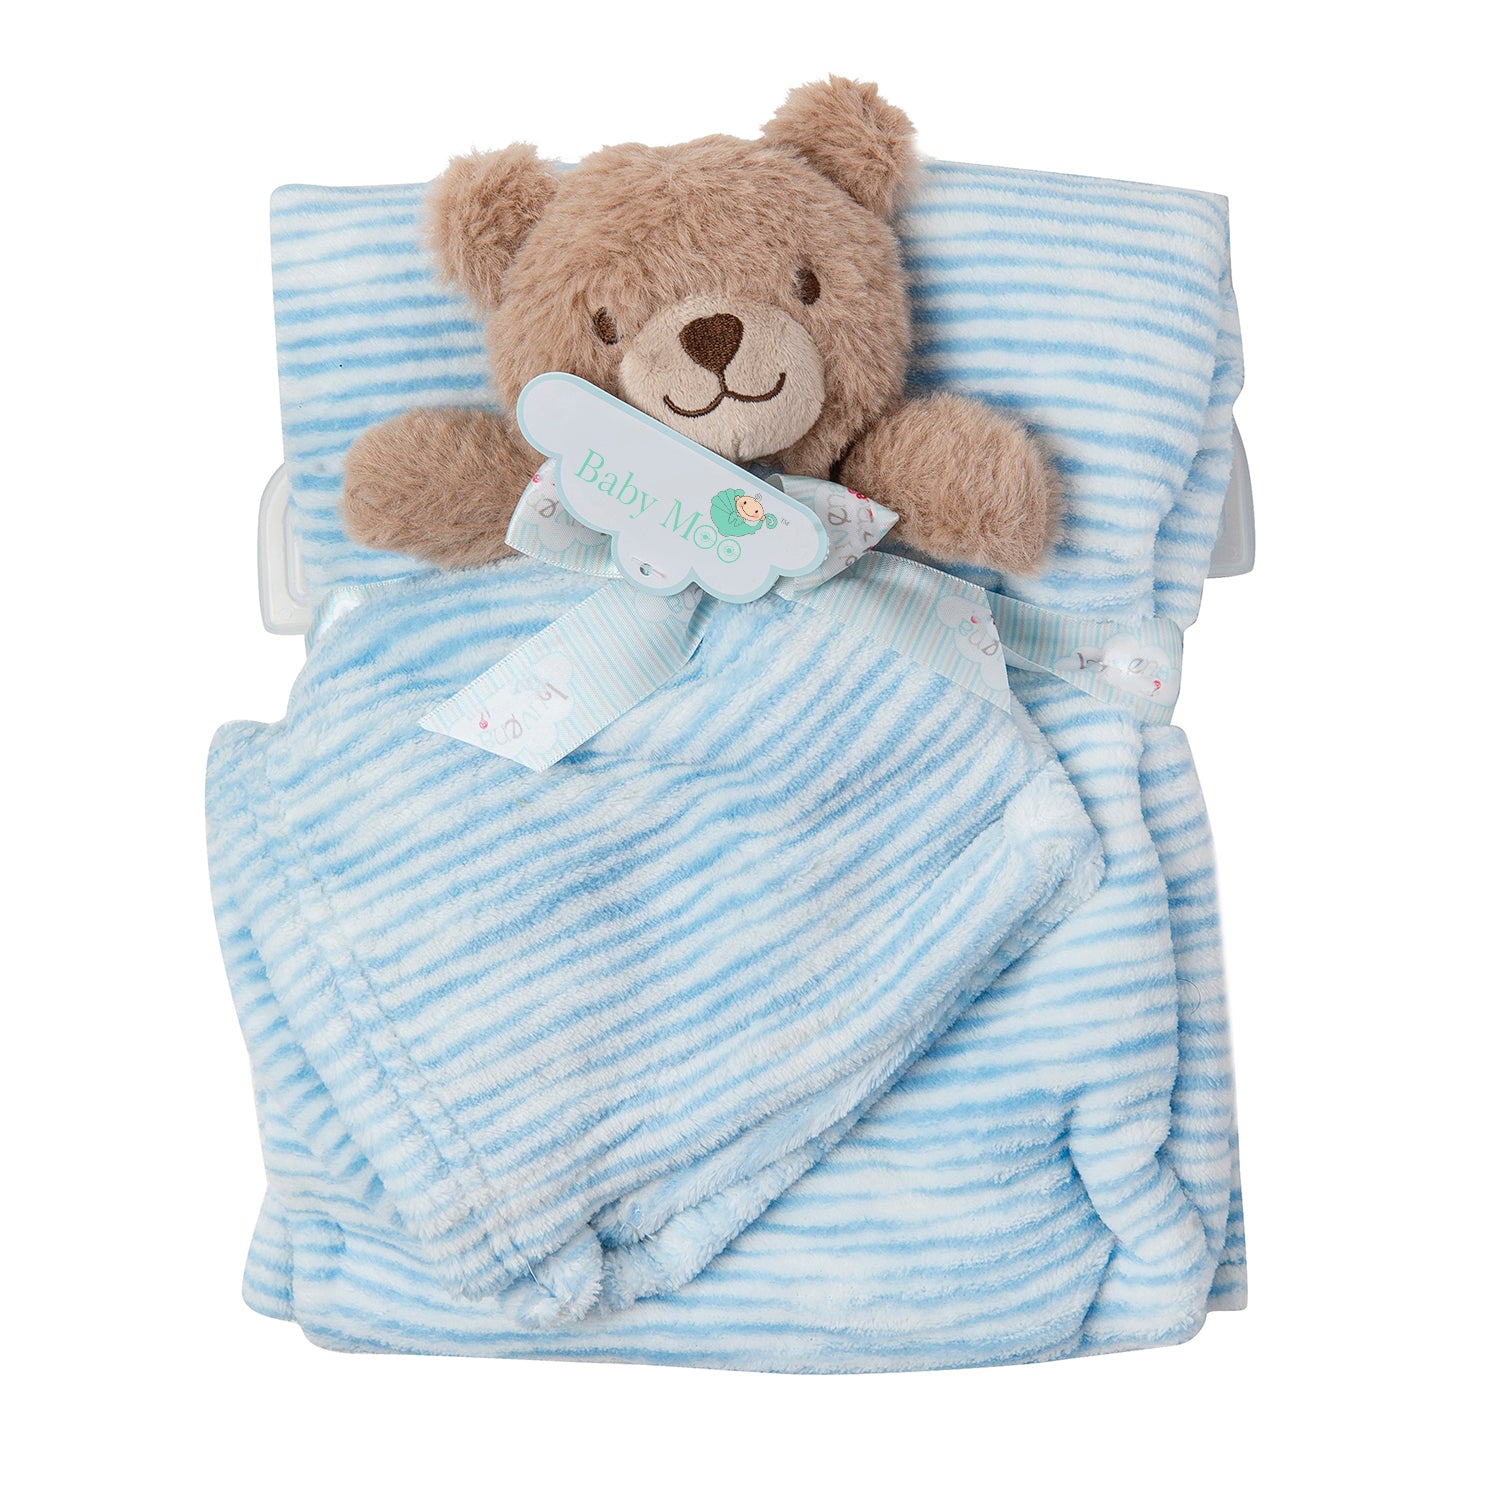 Baby Moo Bear Soft Cozy Plush Toy Blanket Blue & Brown